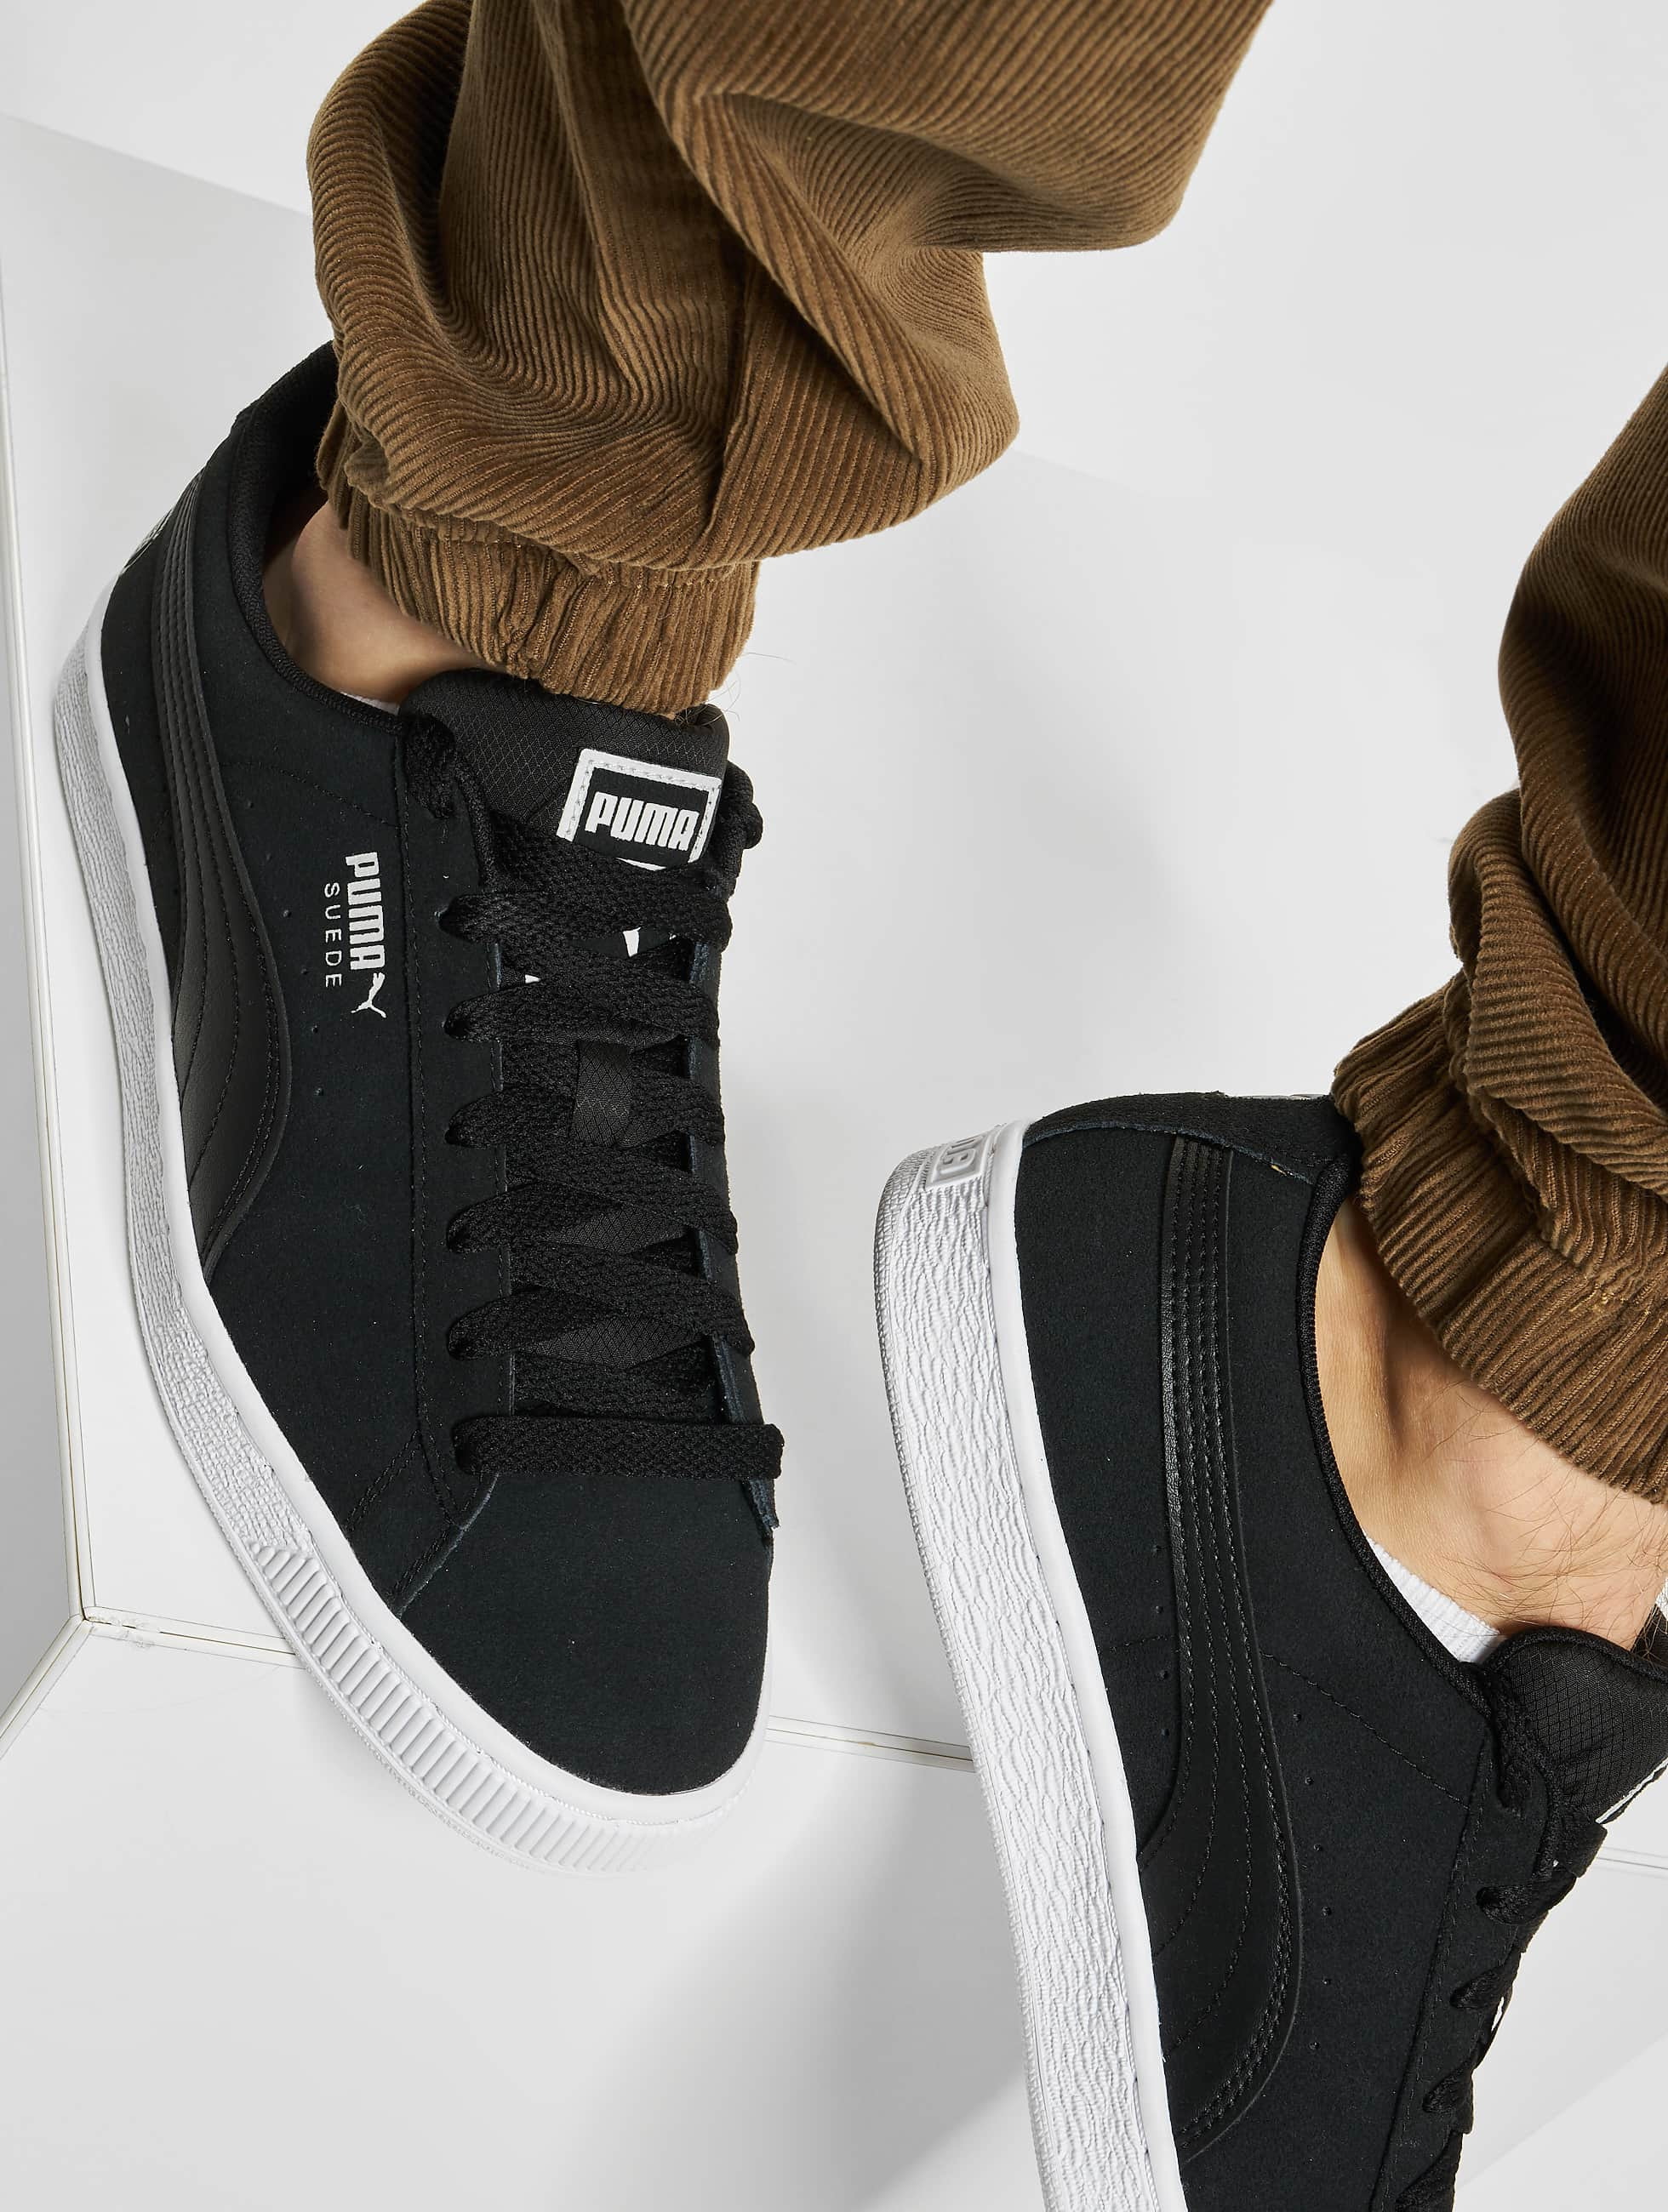 Puma Shoe / Sneakers Re:Style in black 891562